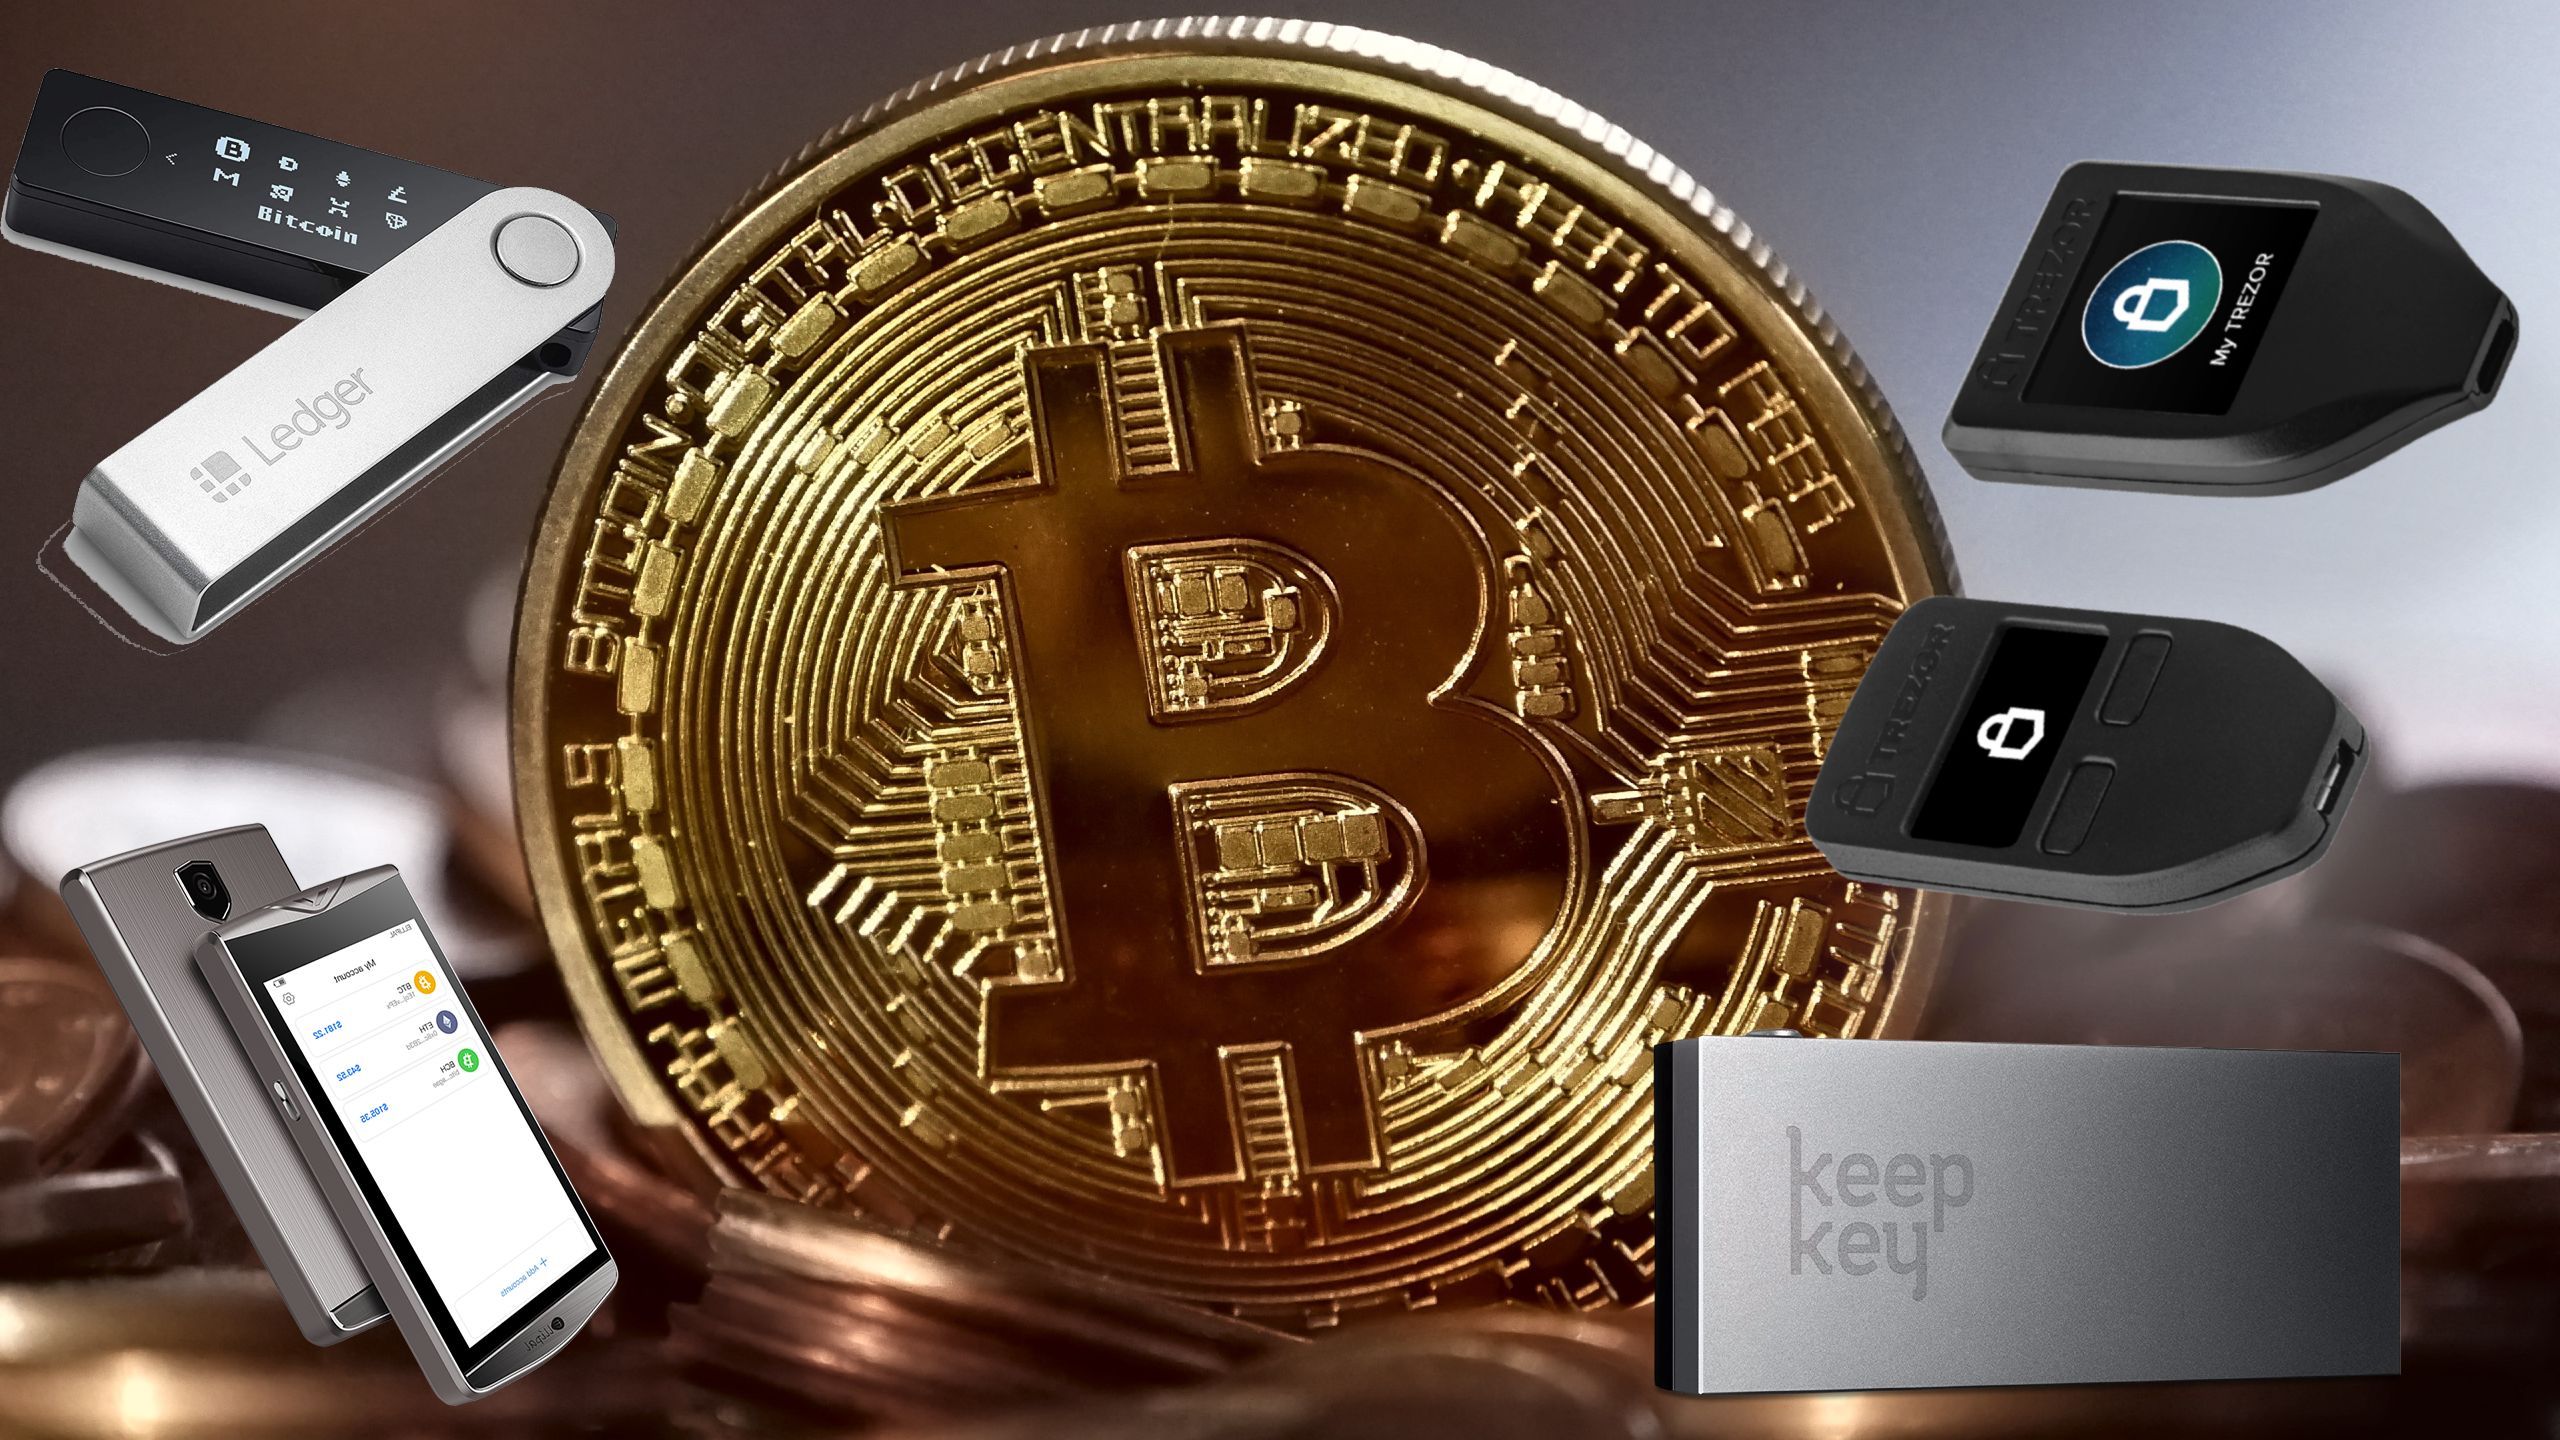 Save your bitcoins